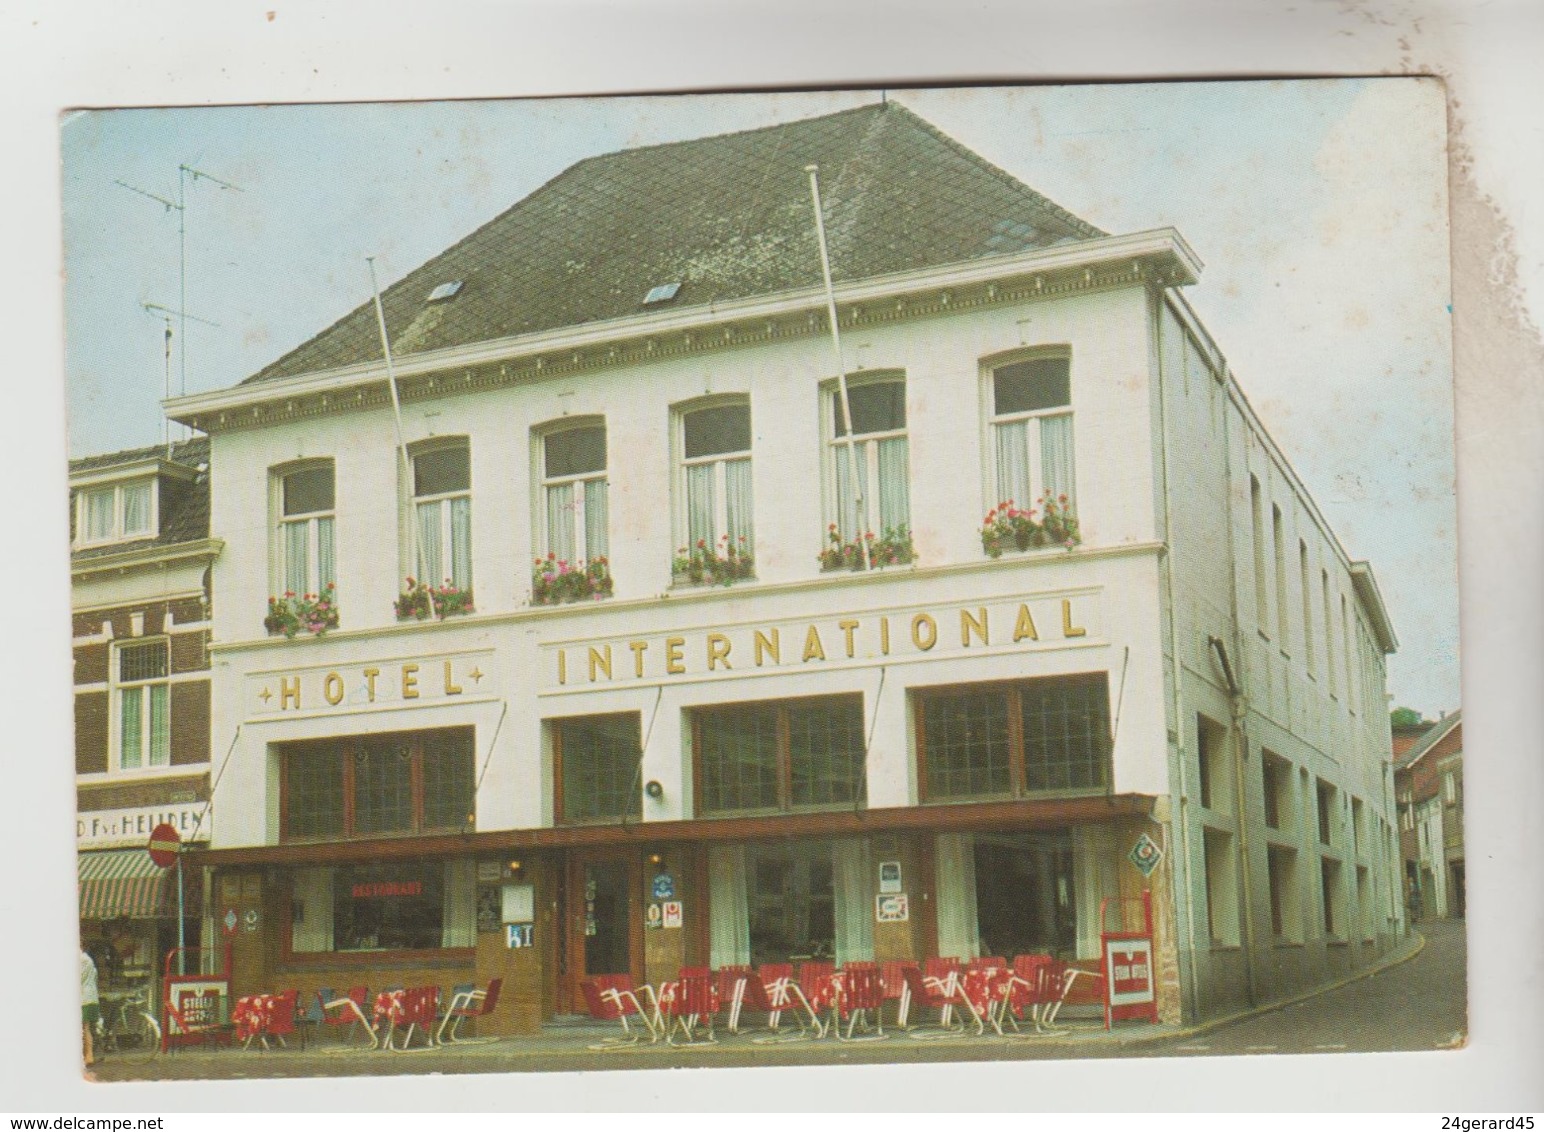 CPSM HULST (Pays Bas-Zélande) - Hôtel Café Restaurant Bar "INTERNATIONAL" Grote Markt 8, E.L.A WAUTERS - Hulst